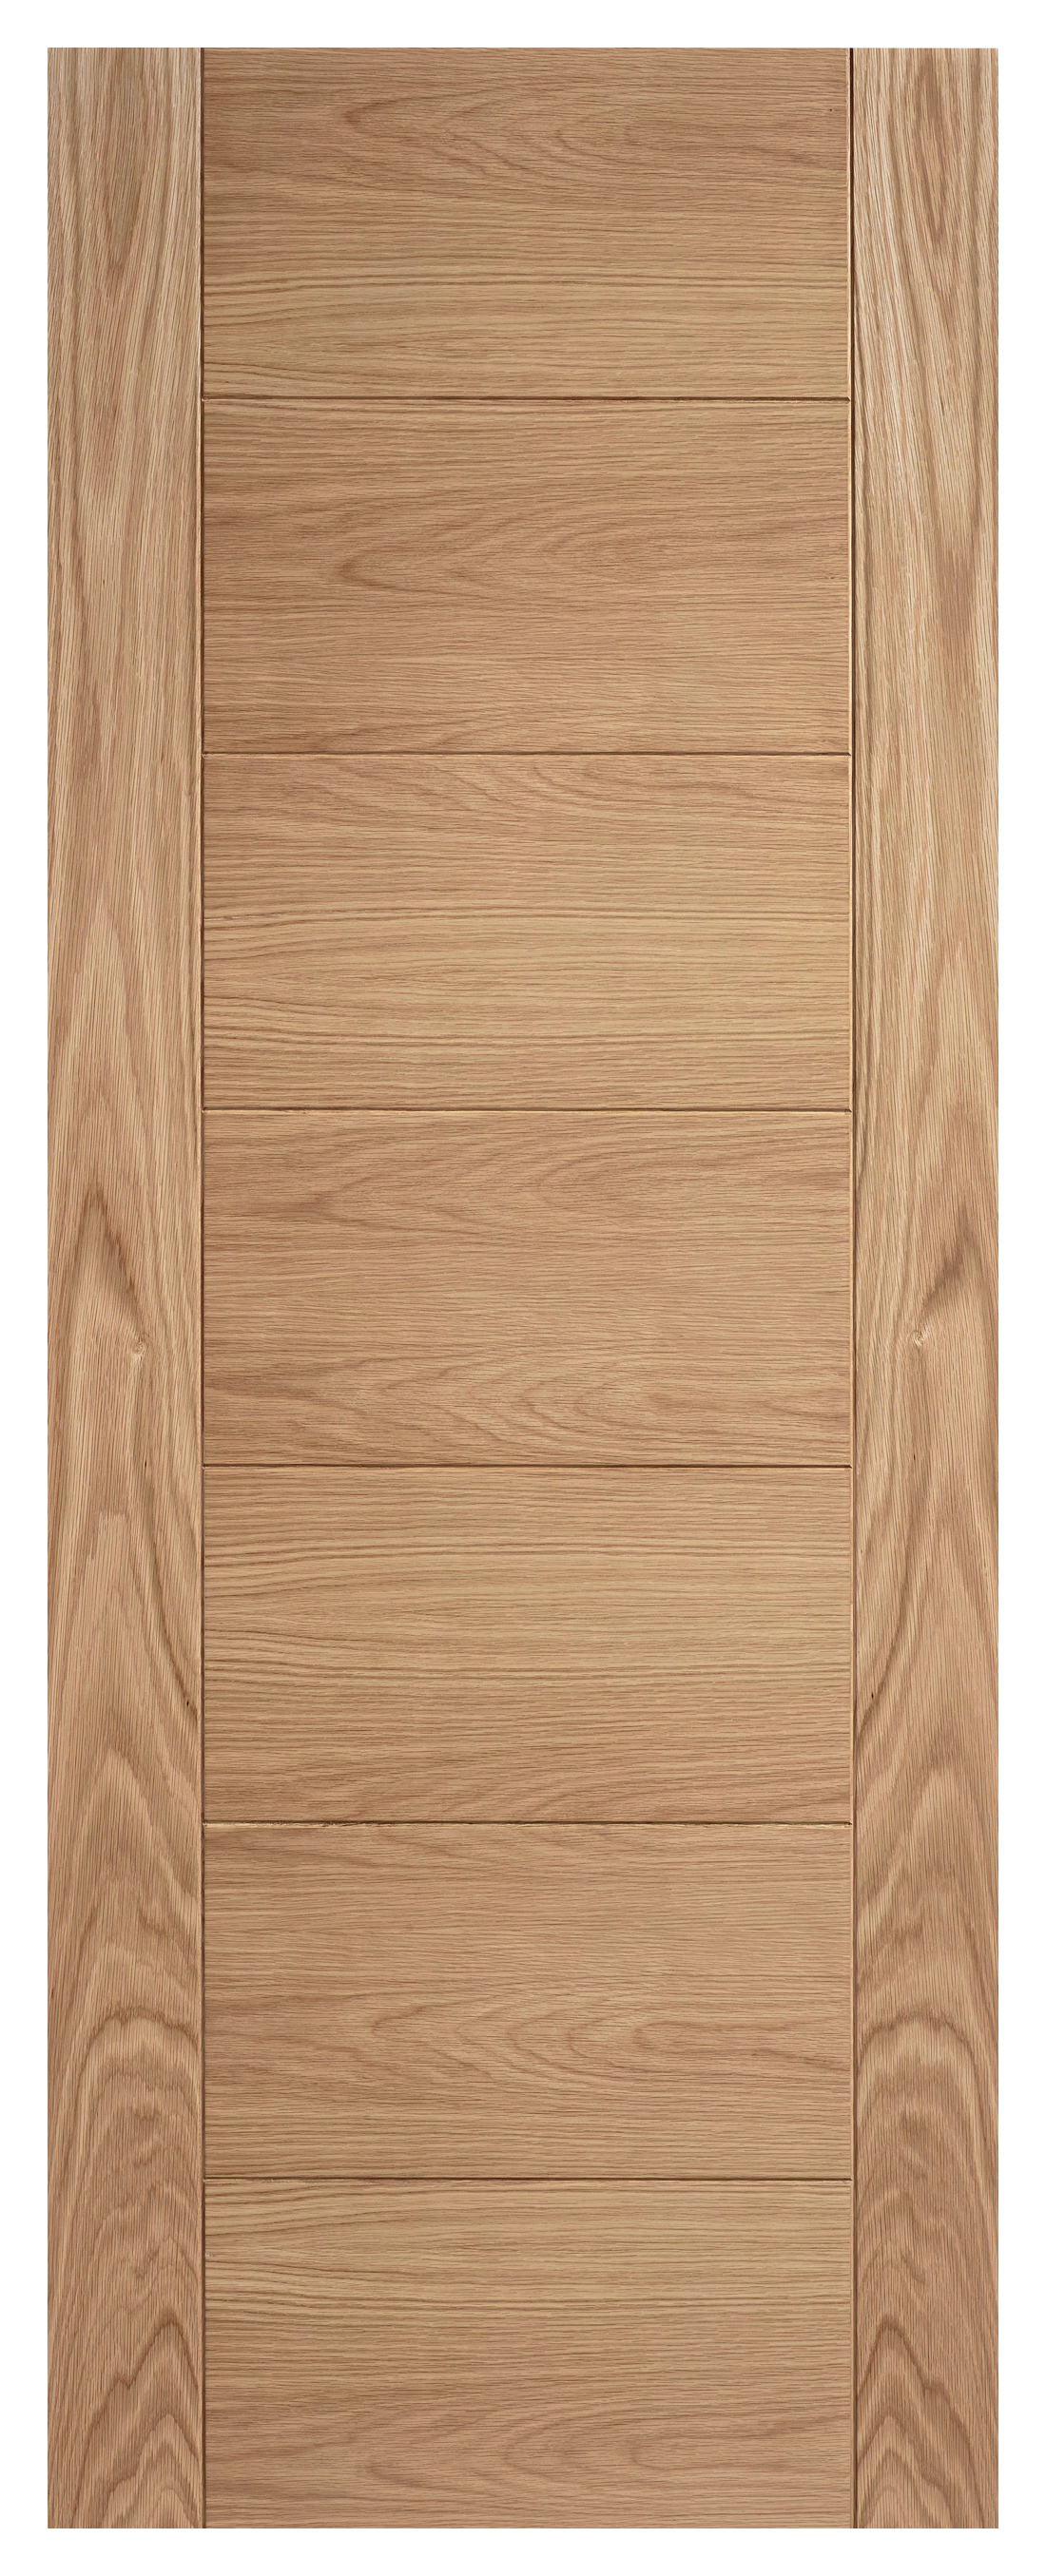 Image of LPD Internal Carini 7 Panel Unfinished Oak Solid Core Door - 838 x 1981mm